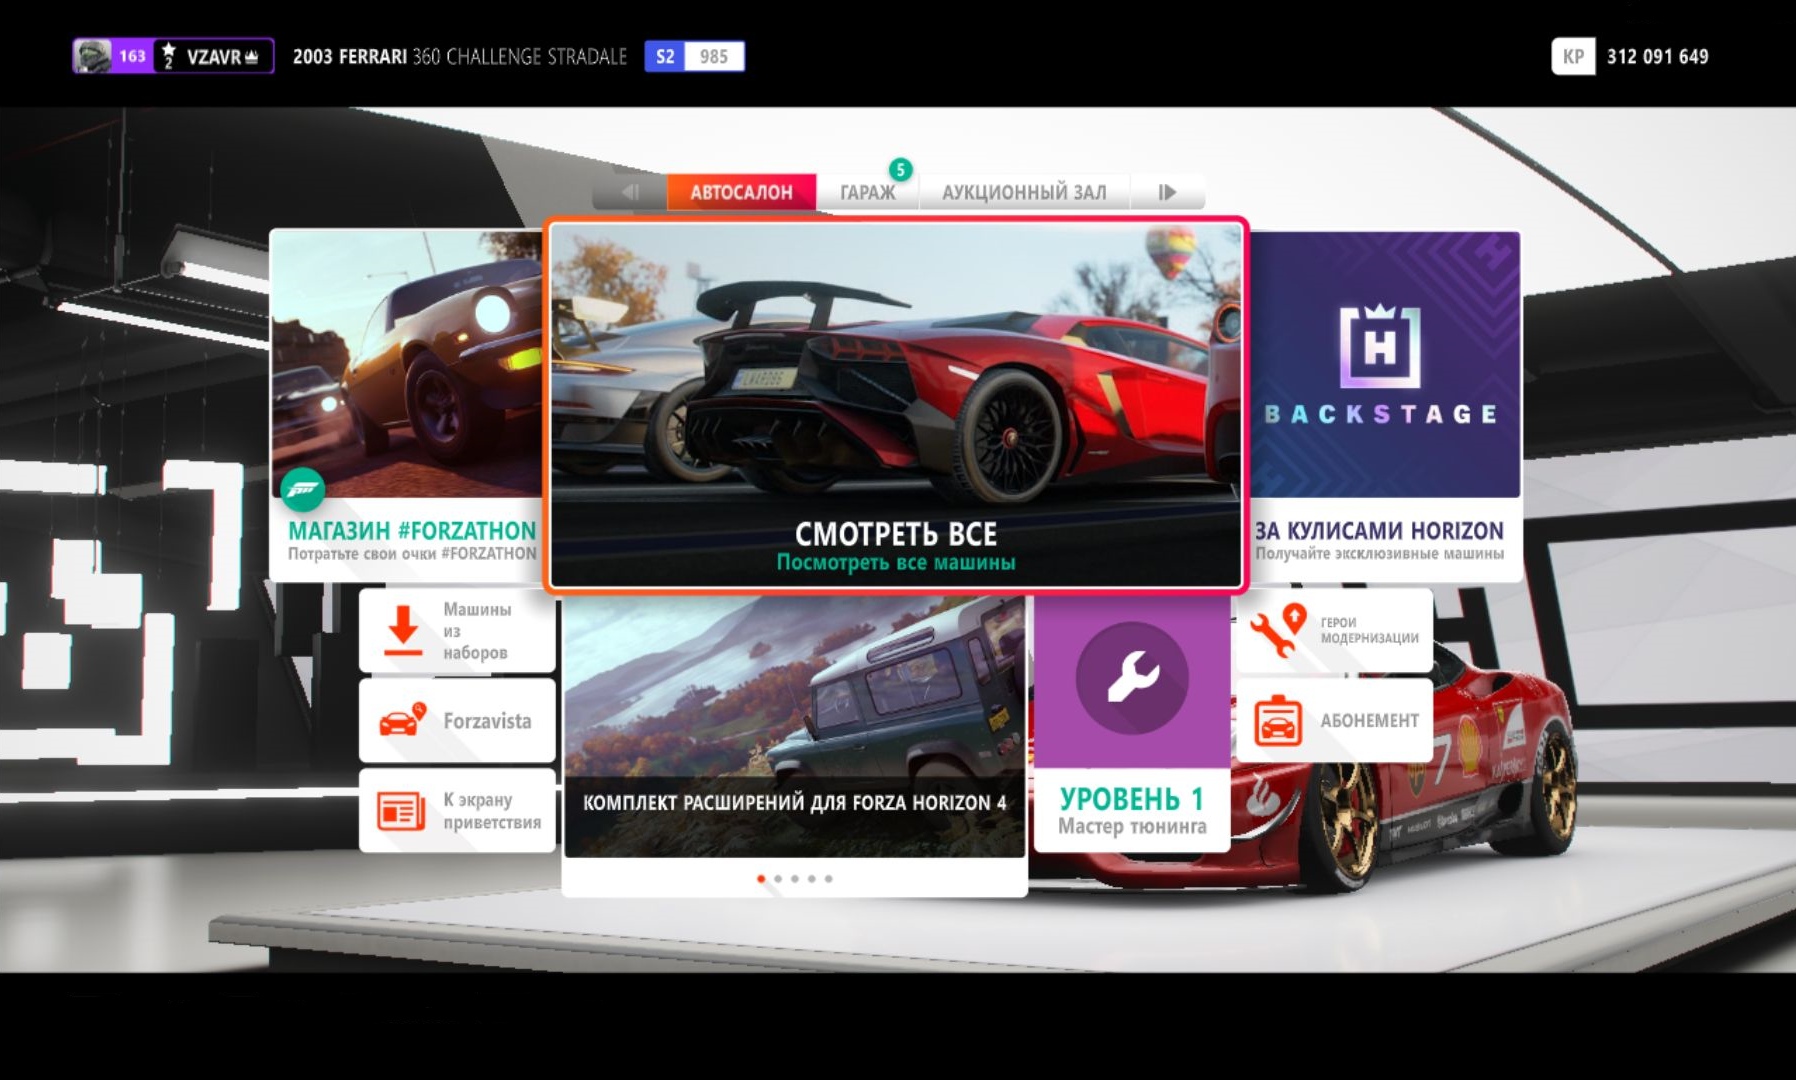 Forza Horizon 4 - Racing with the $10 MILLION DOLLAR FERRARI! ALL NEW